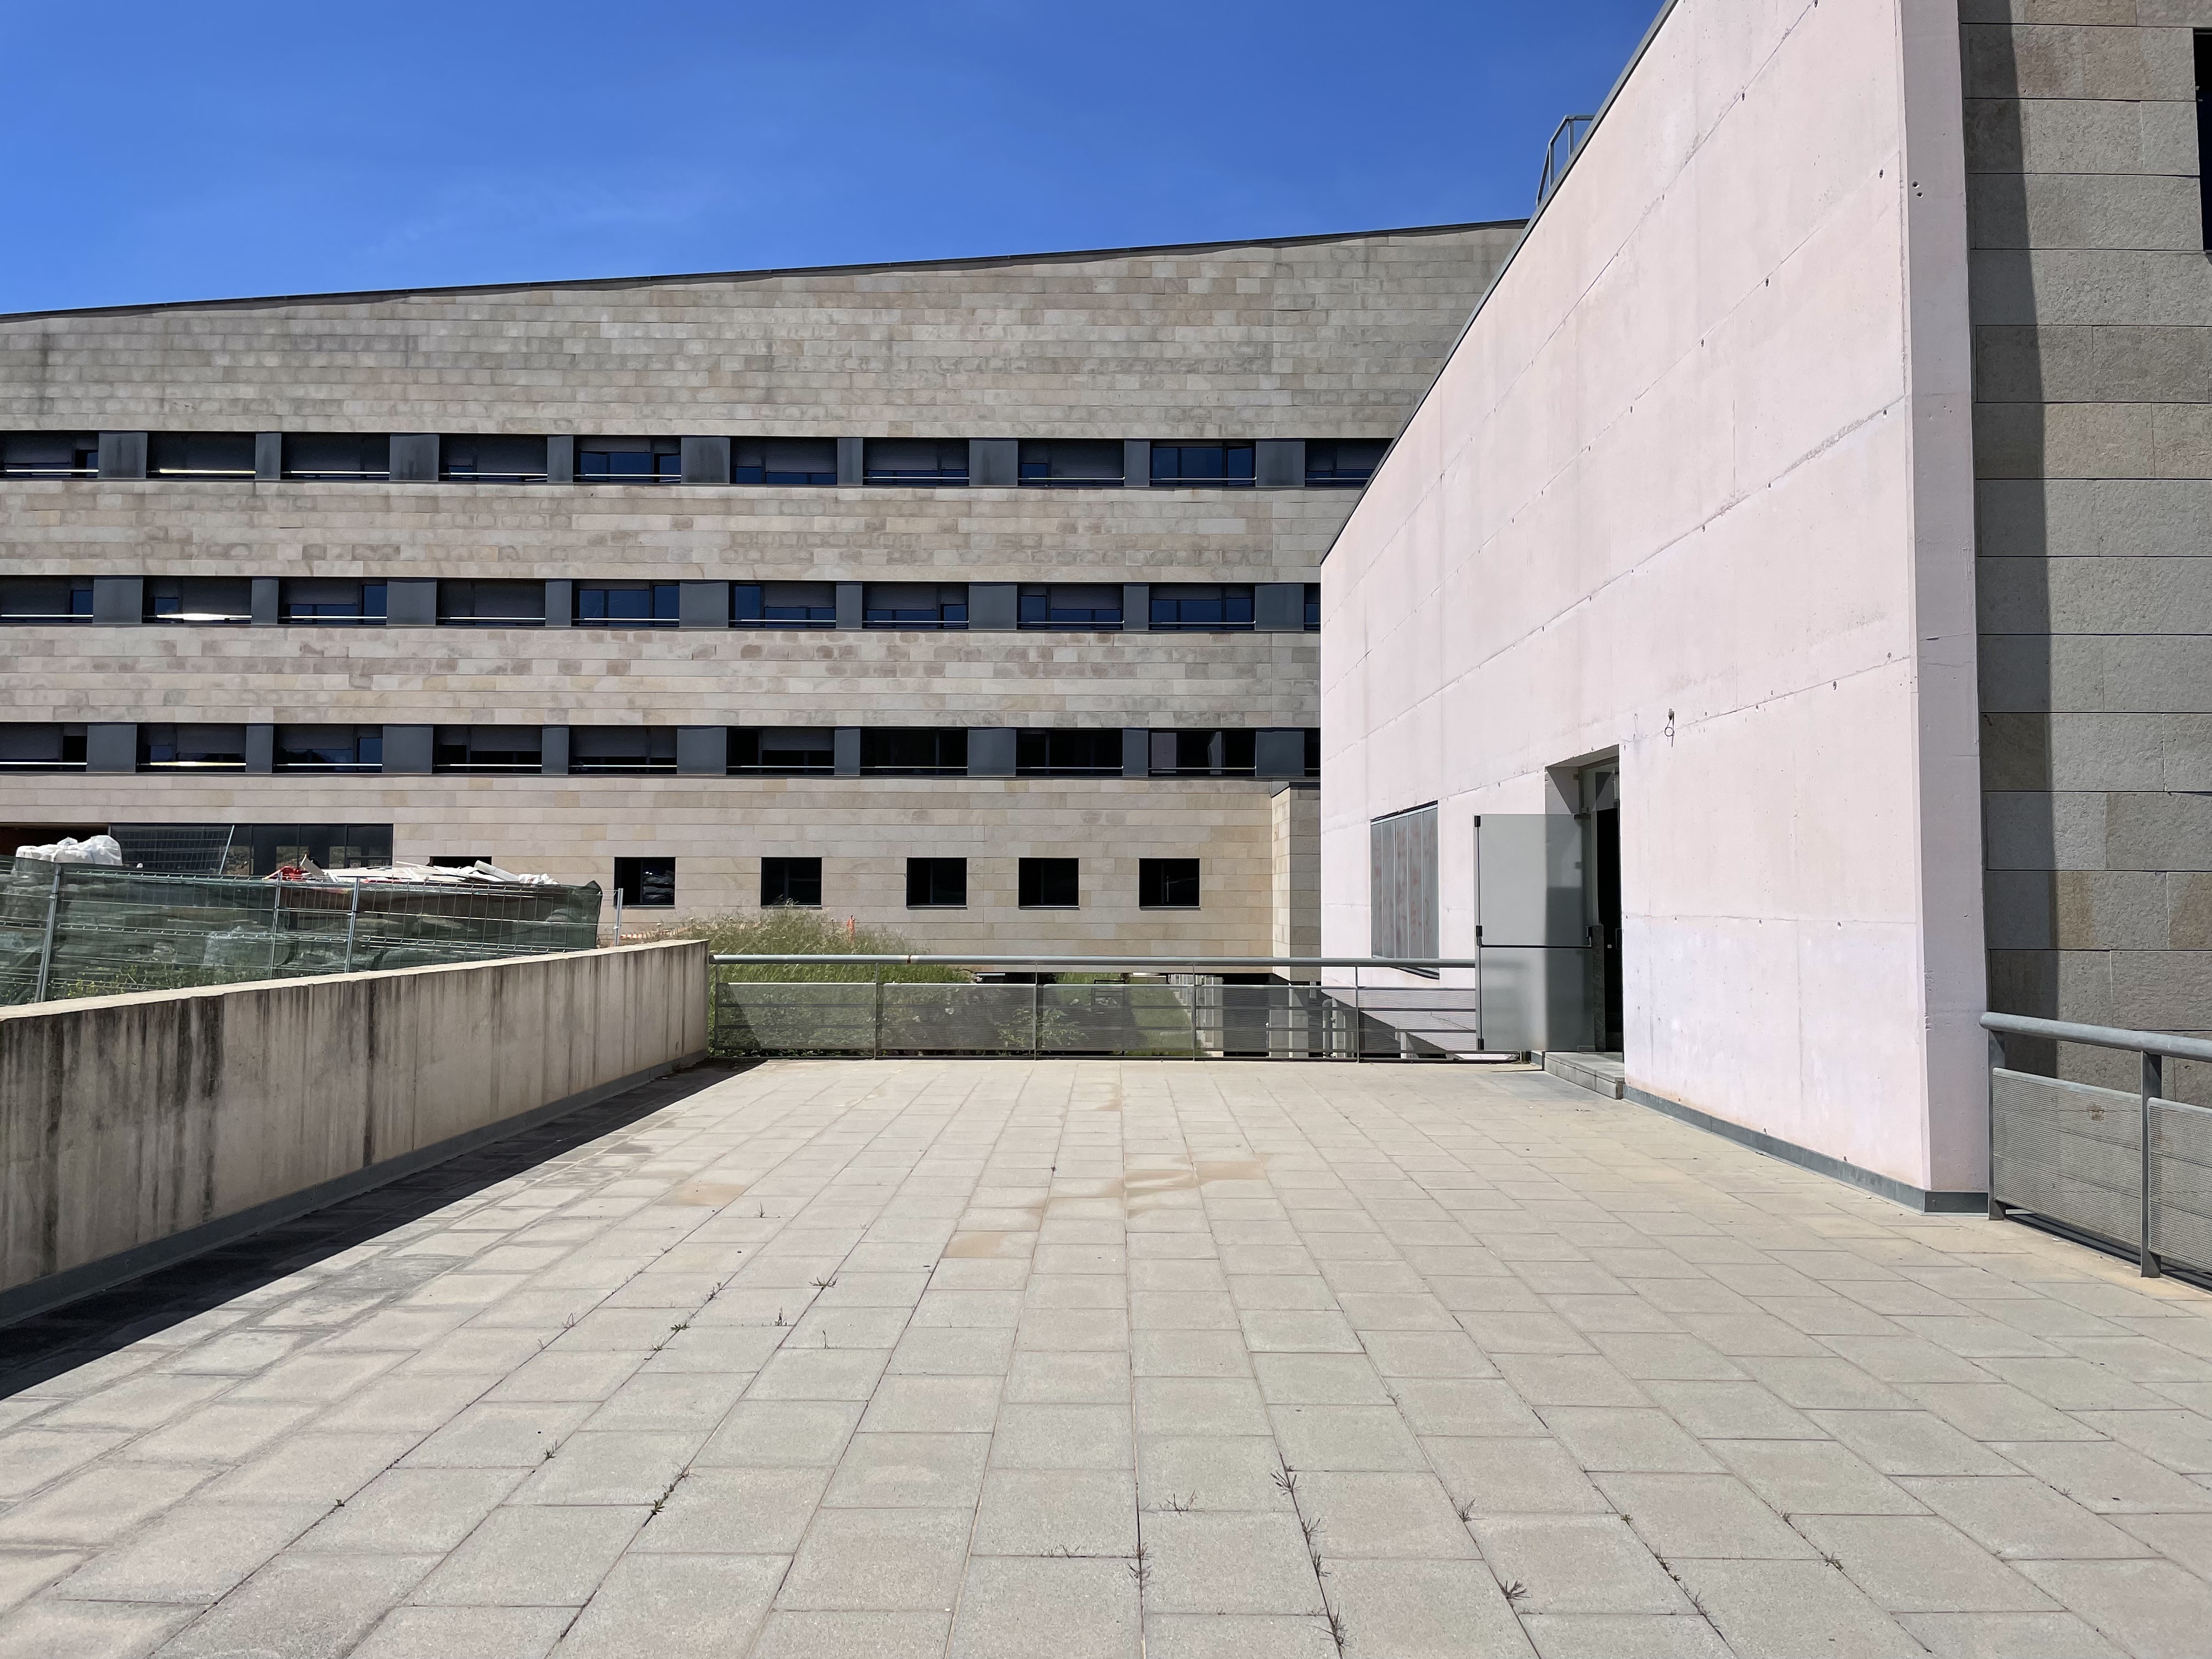 Proyecto de ampliación del Hospital de El Vendrell (Tarragona)